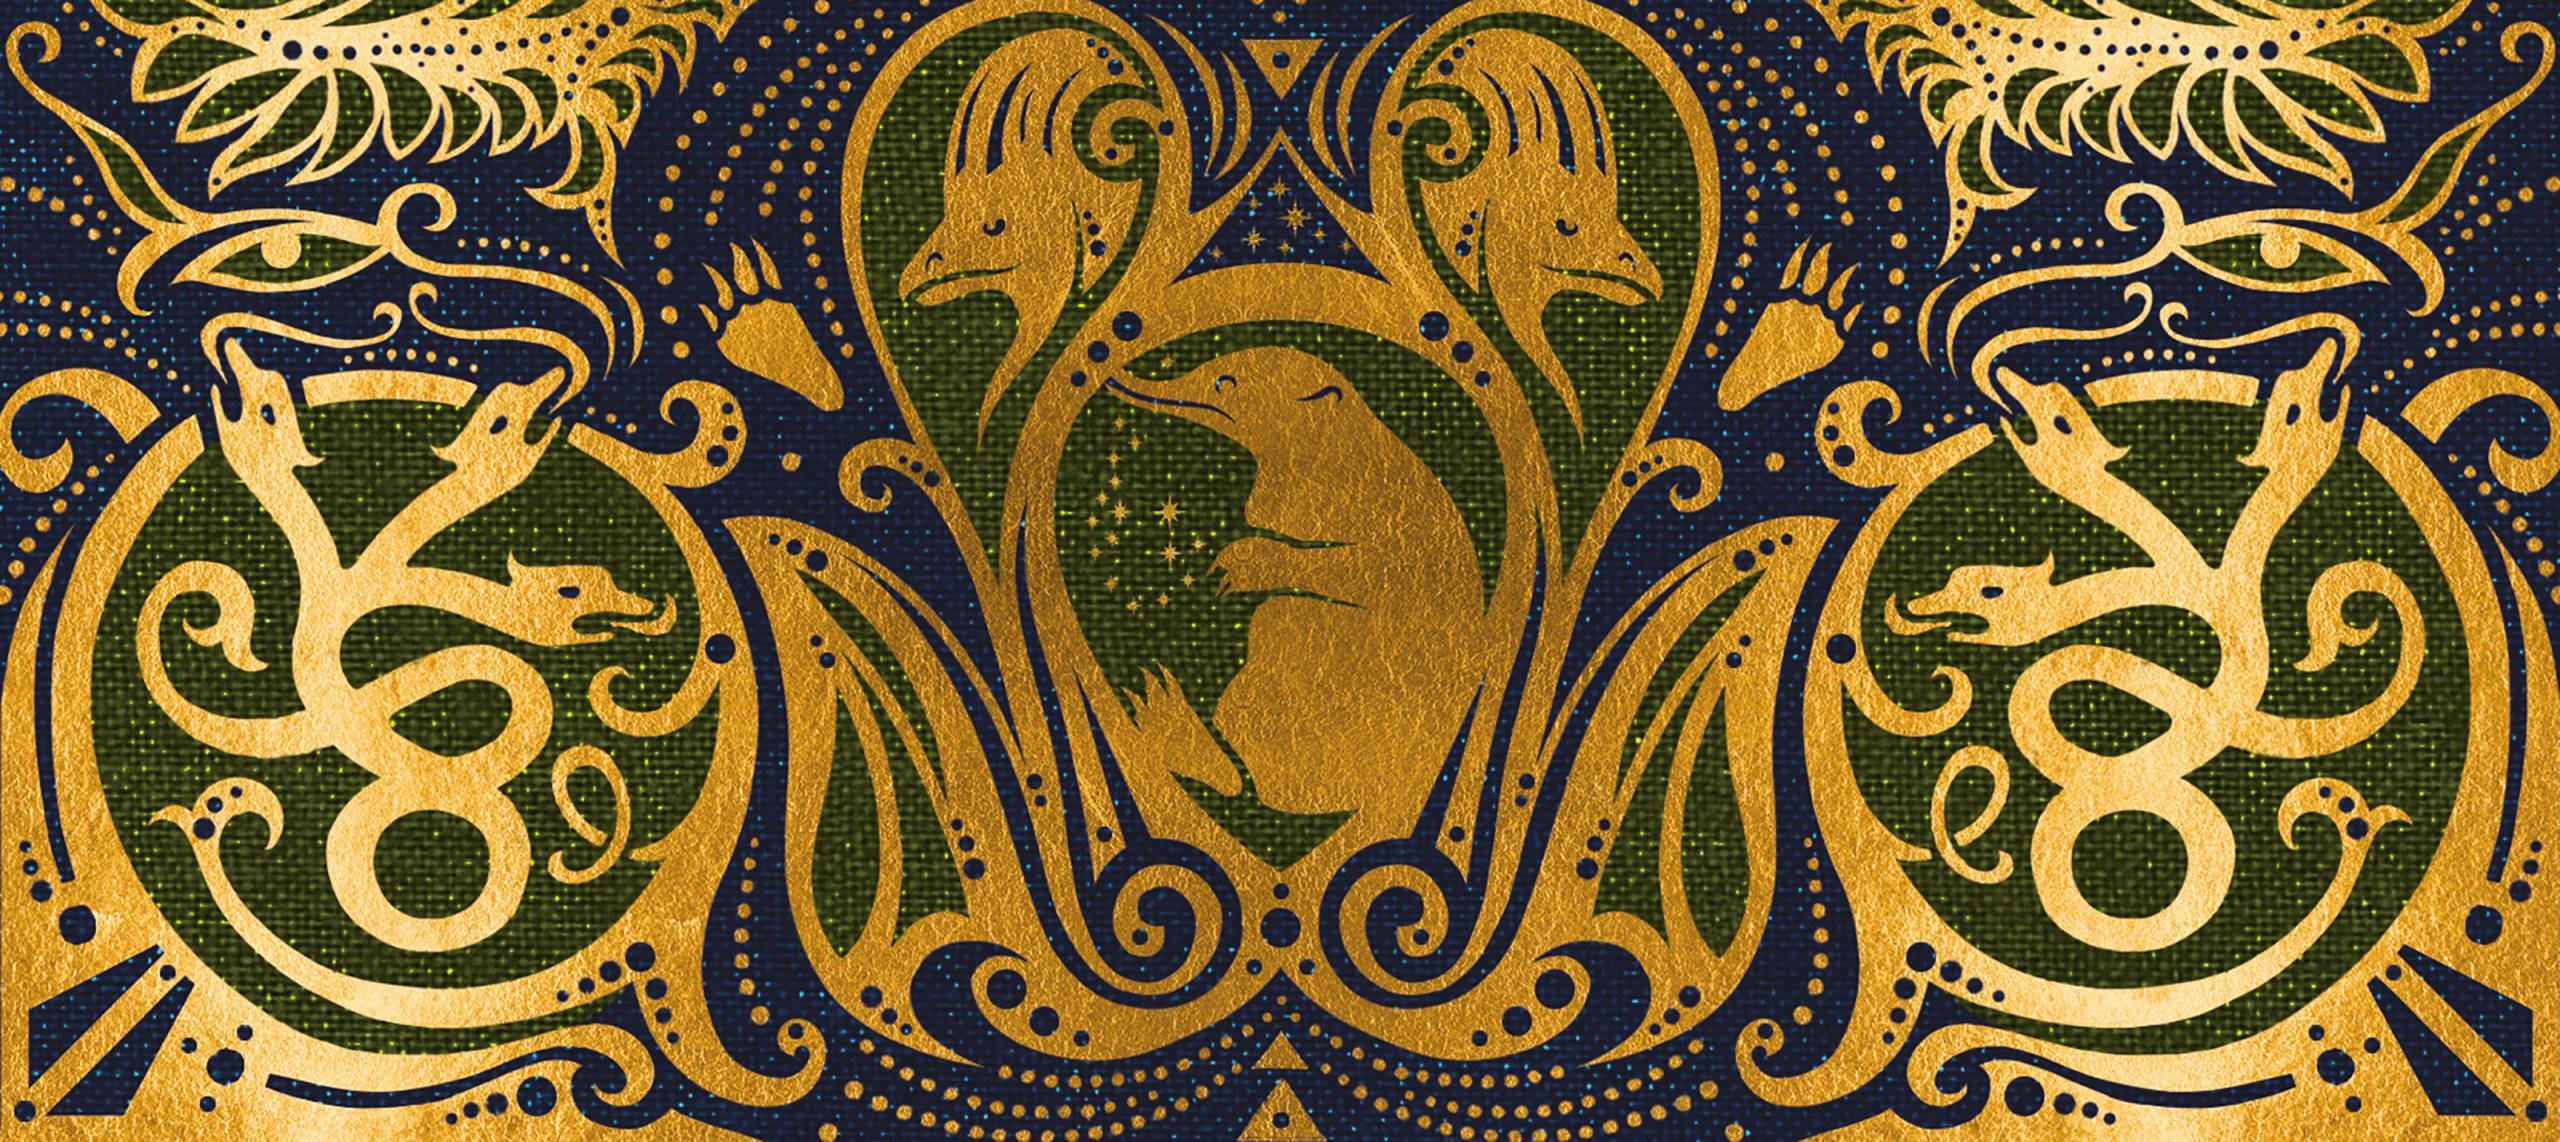 A close-up of the Fantastic Beasts Original Screenplay cover